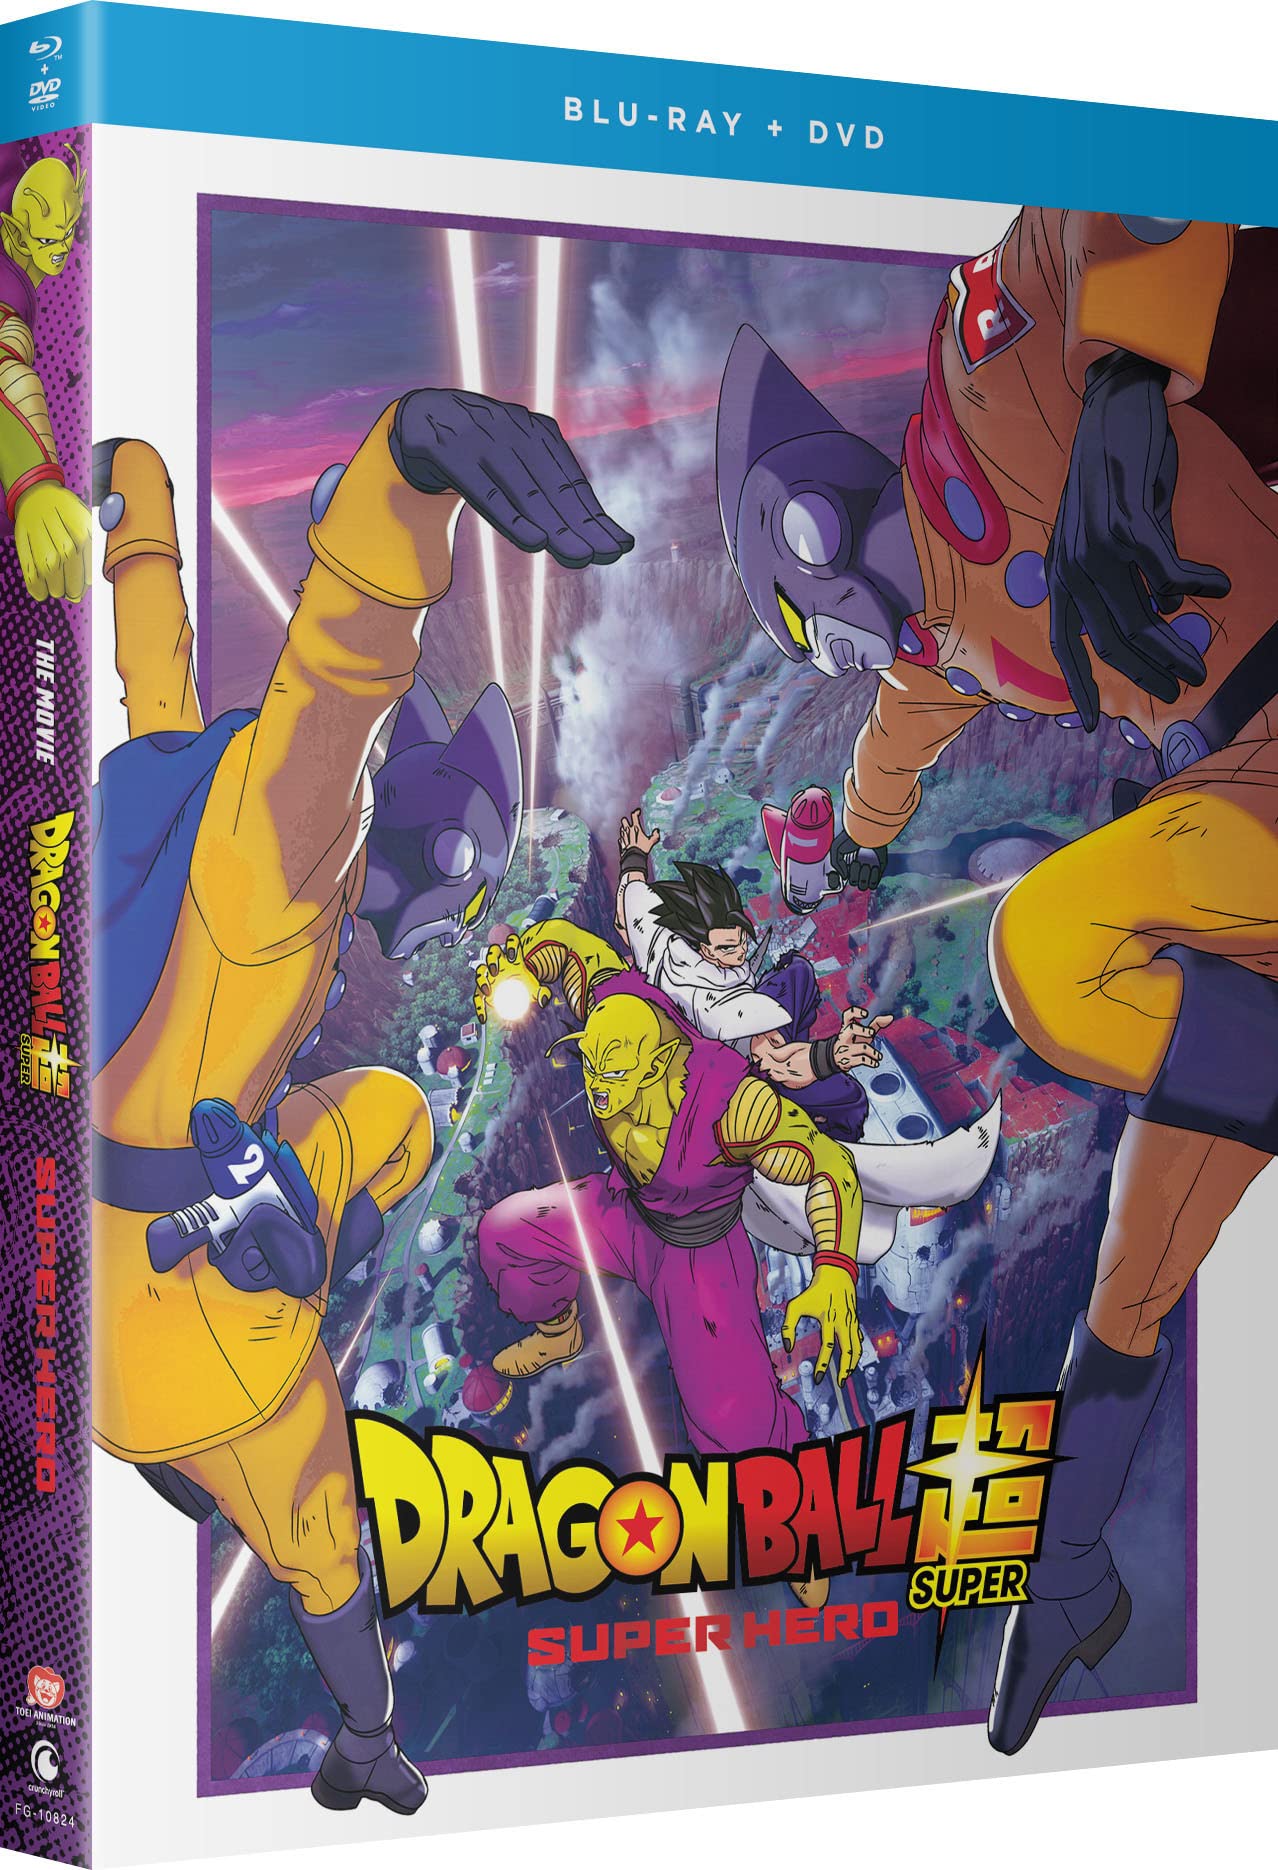 Dragon Ball Super: Super Hero (Blu-ray + DVD) $16.13 + Free Shipping w/ Prime or on Orders $25+